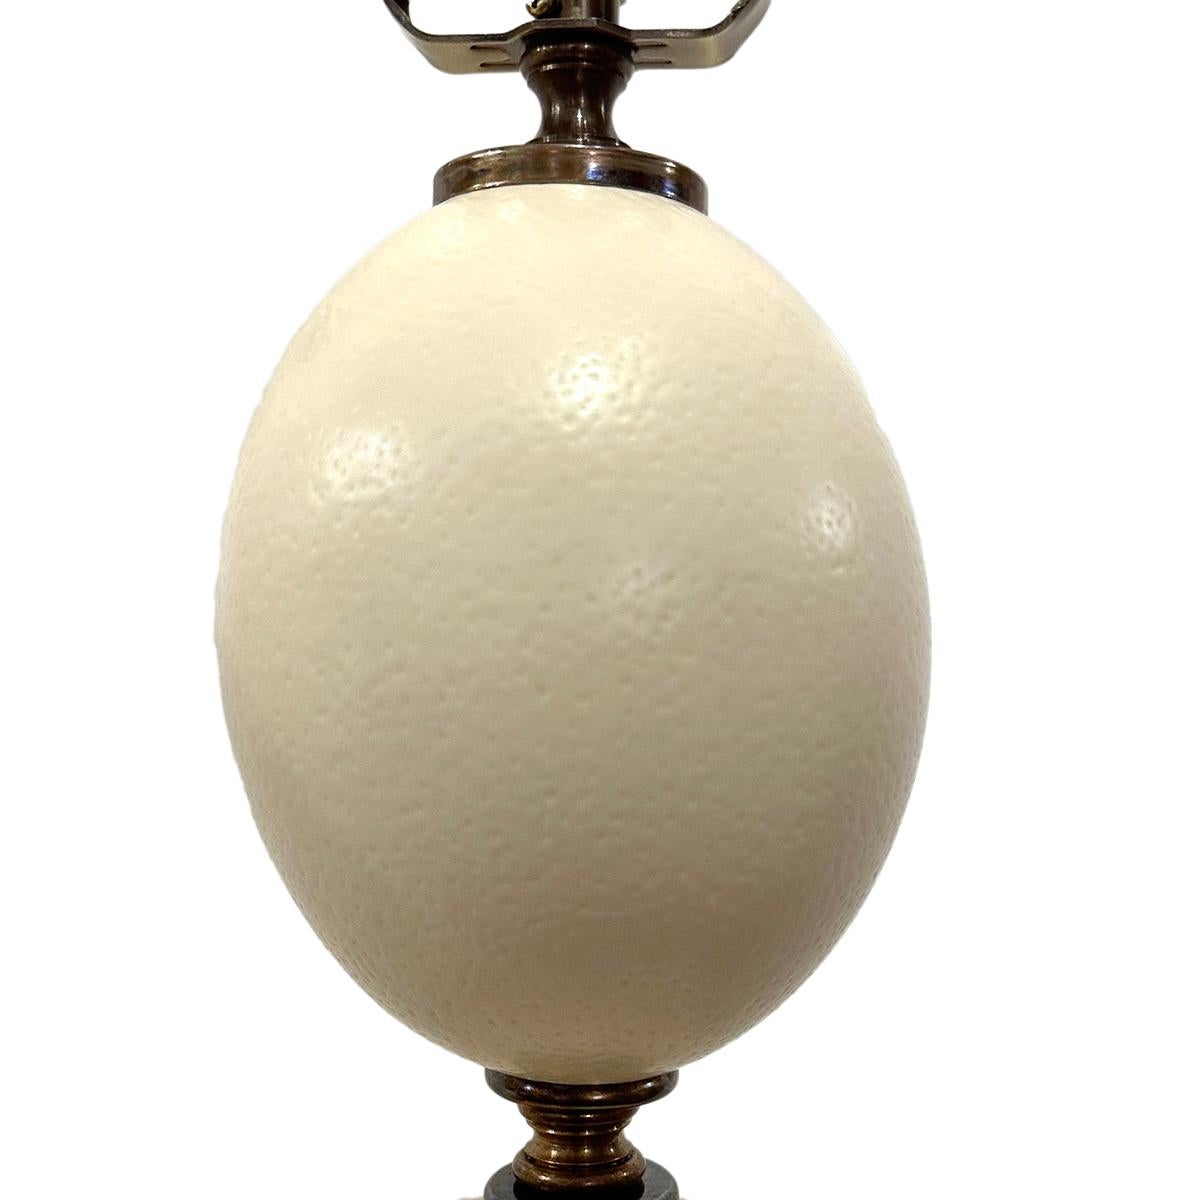 ostrich egg lamp shade